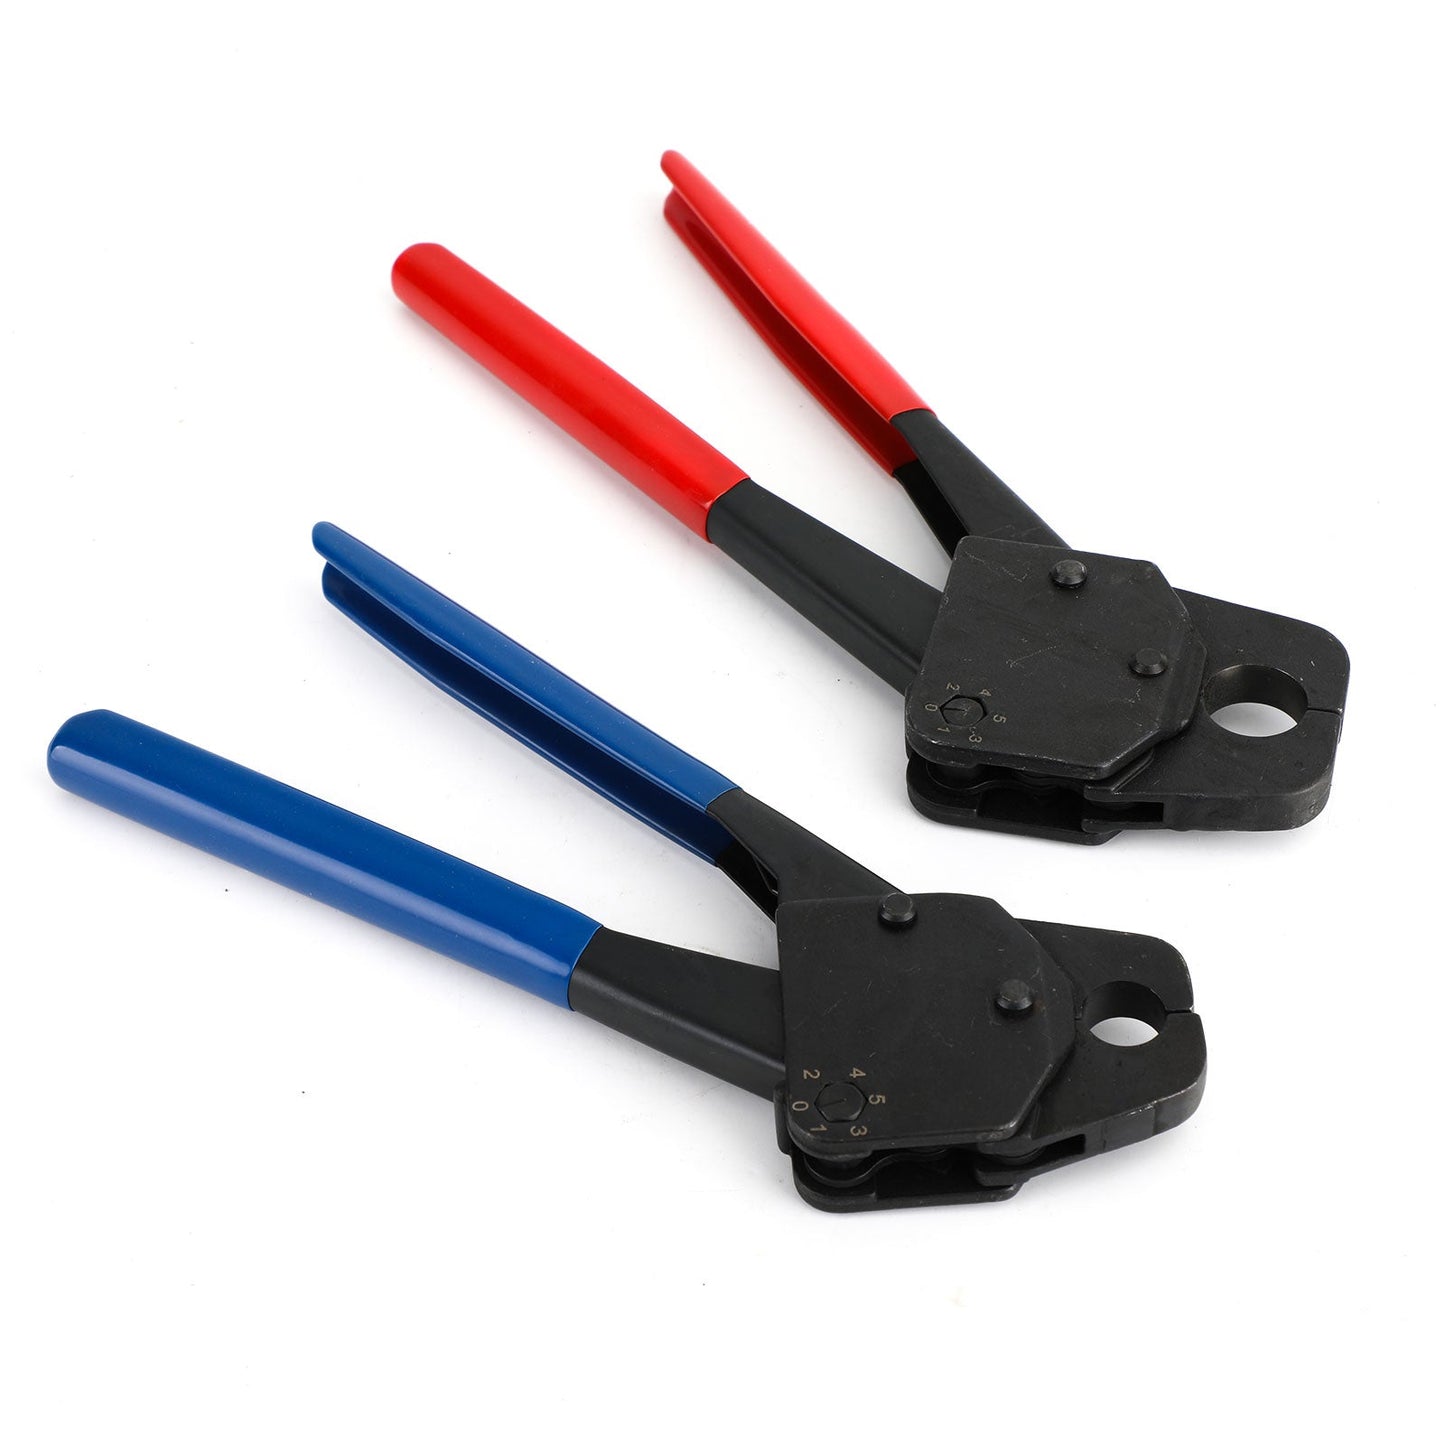 2 Pex Crimper 1/2" And 3/4" Plumbing Crimping Gonogo Set Angle Gauge Tools Combo